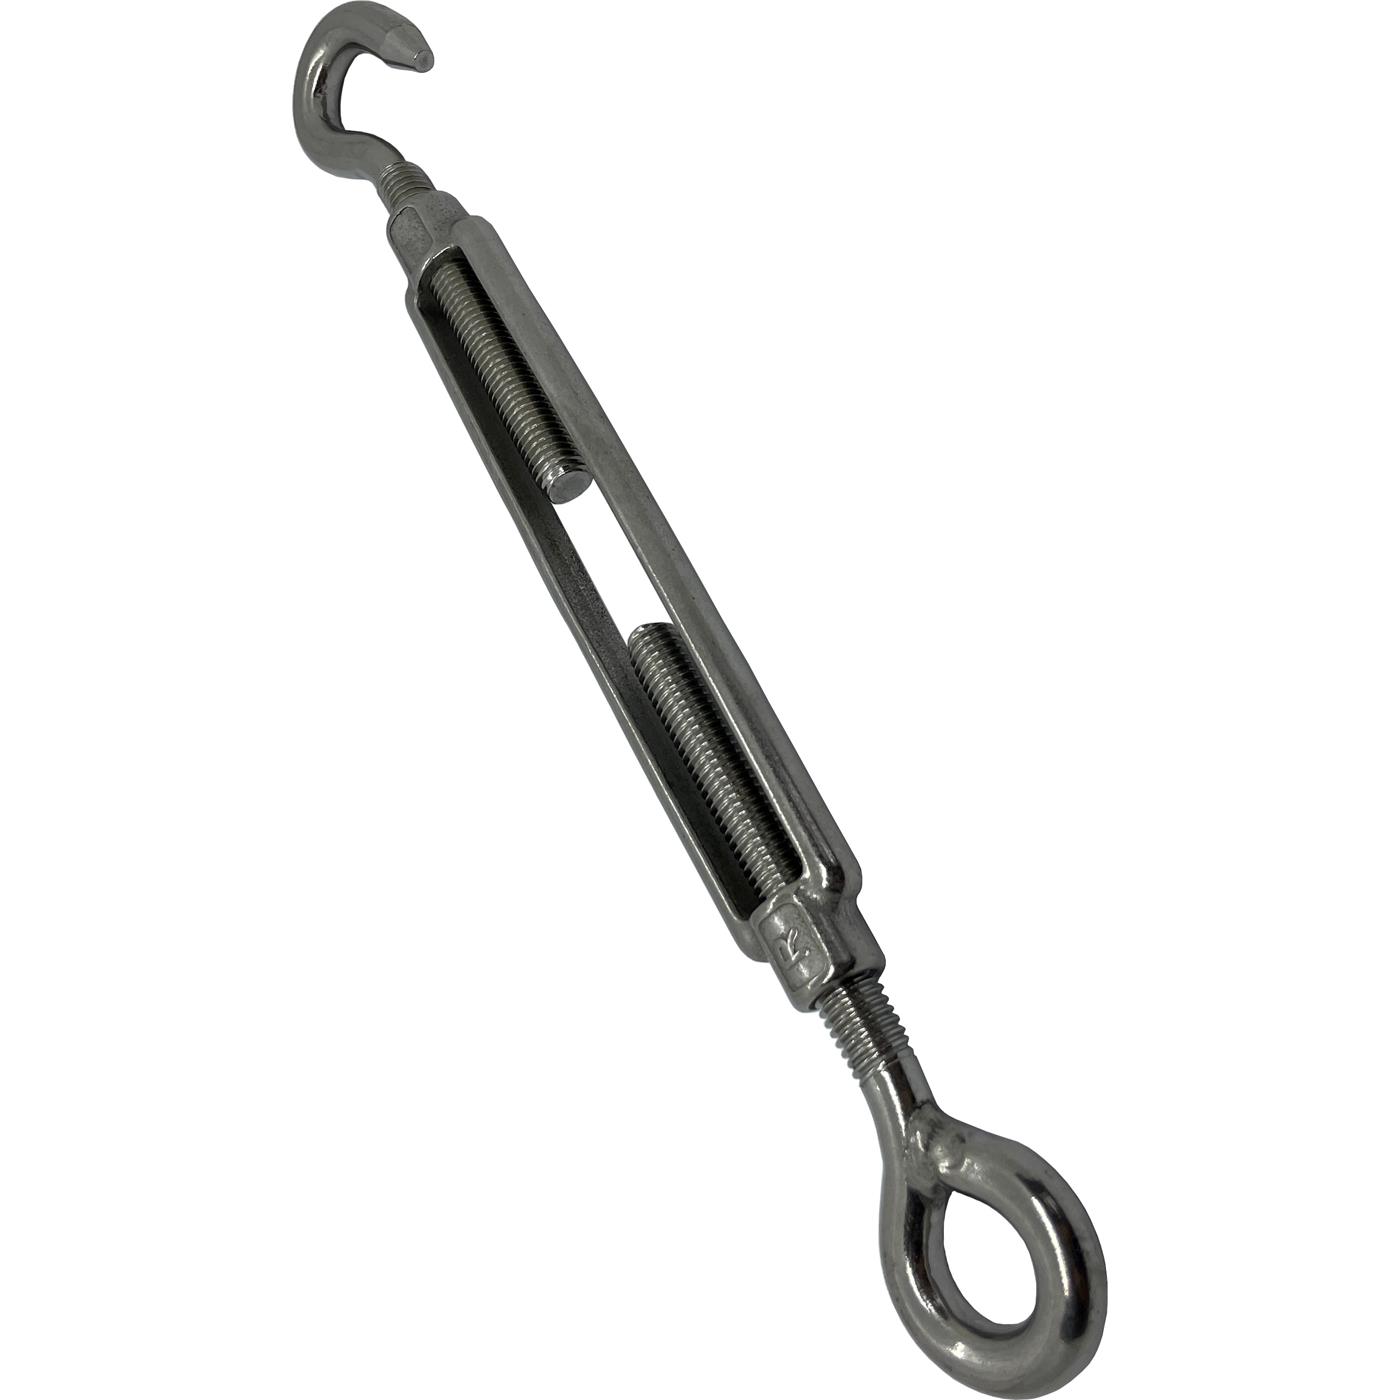 Rope tensioner Eyelet-Hook Stainless steel V4A 316 M8 Turnbuckle Shroud clamp